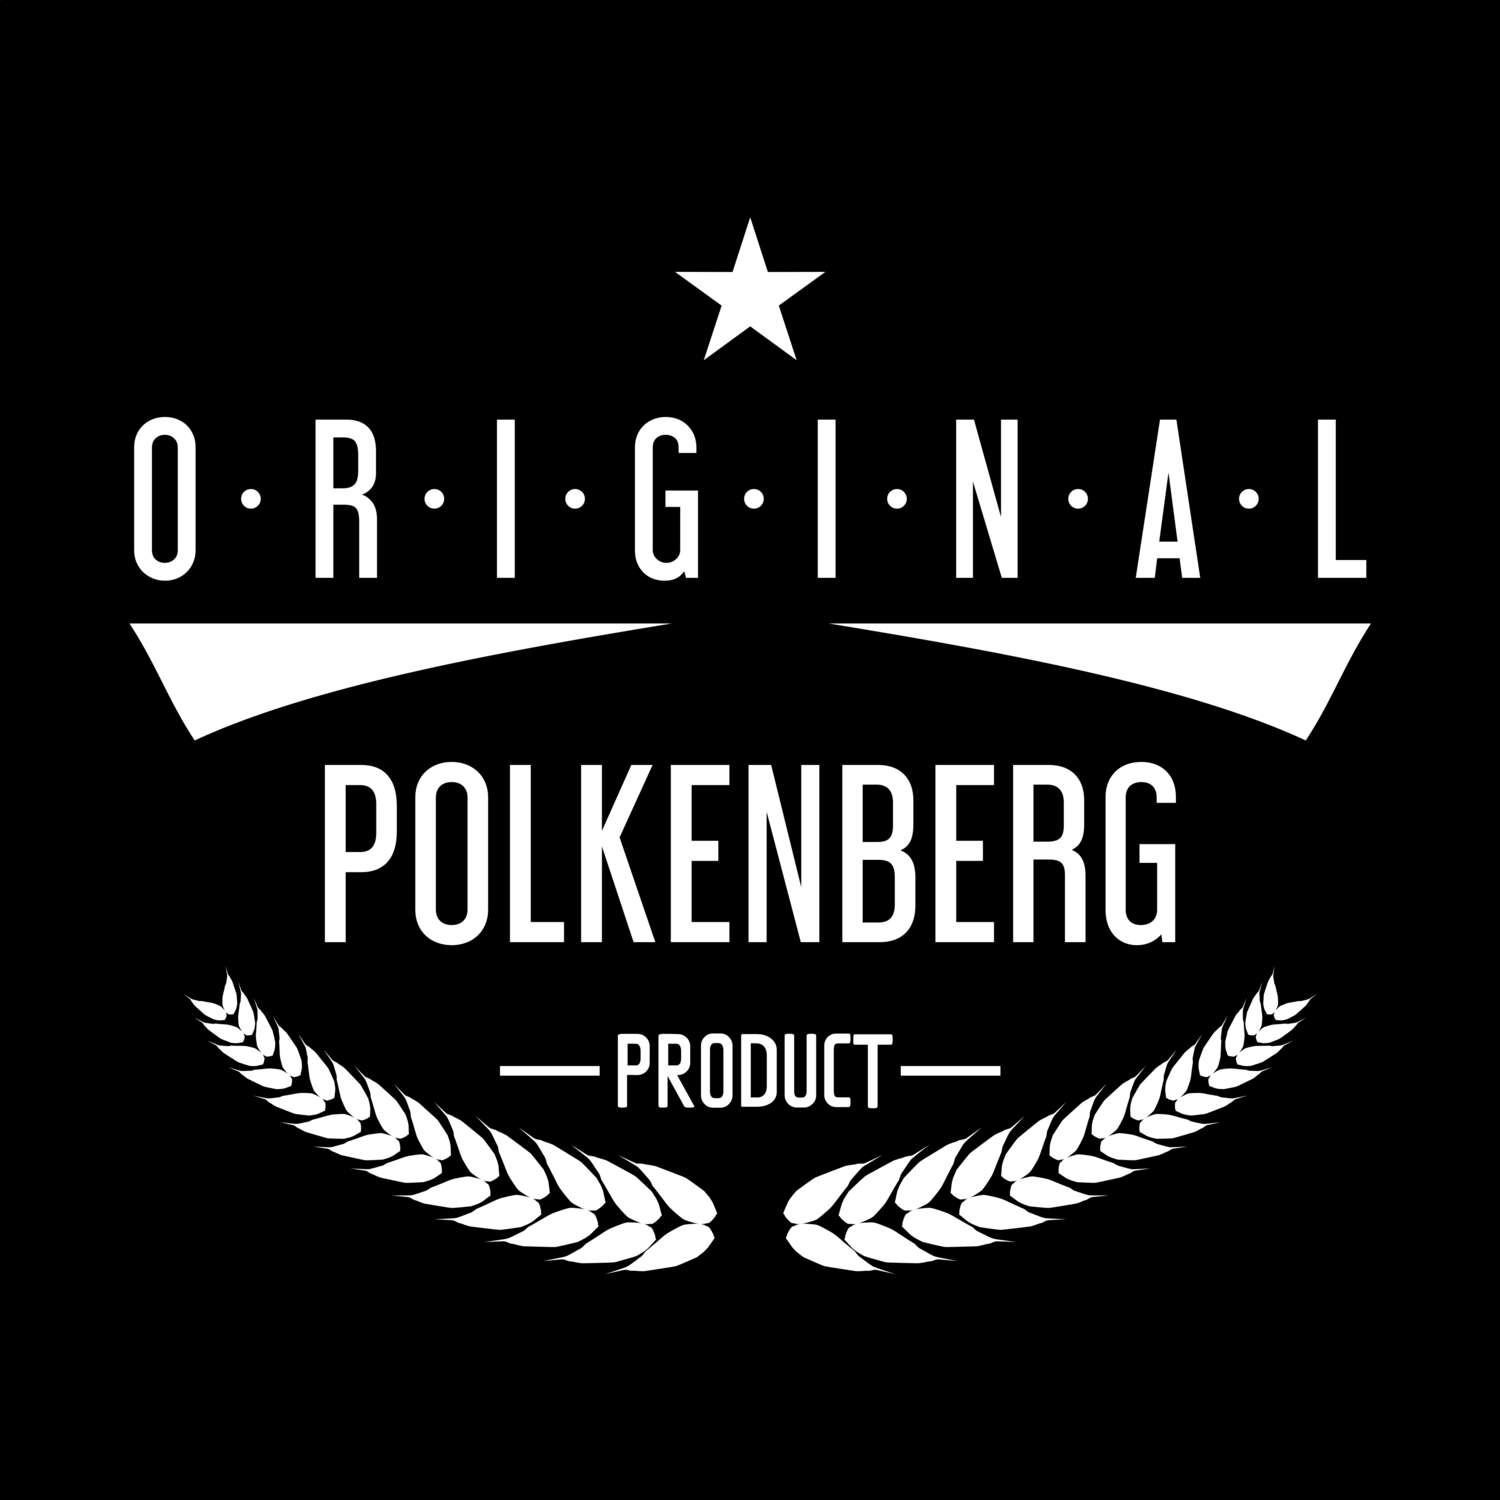 Polkenberg T-Shirt »Original Product«